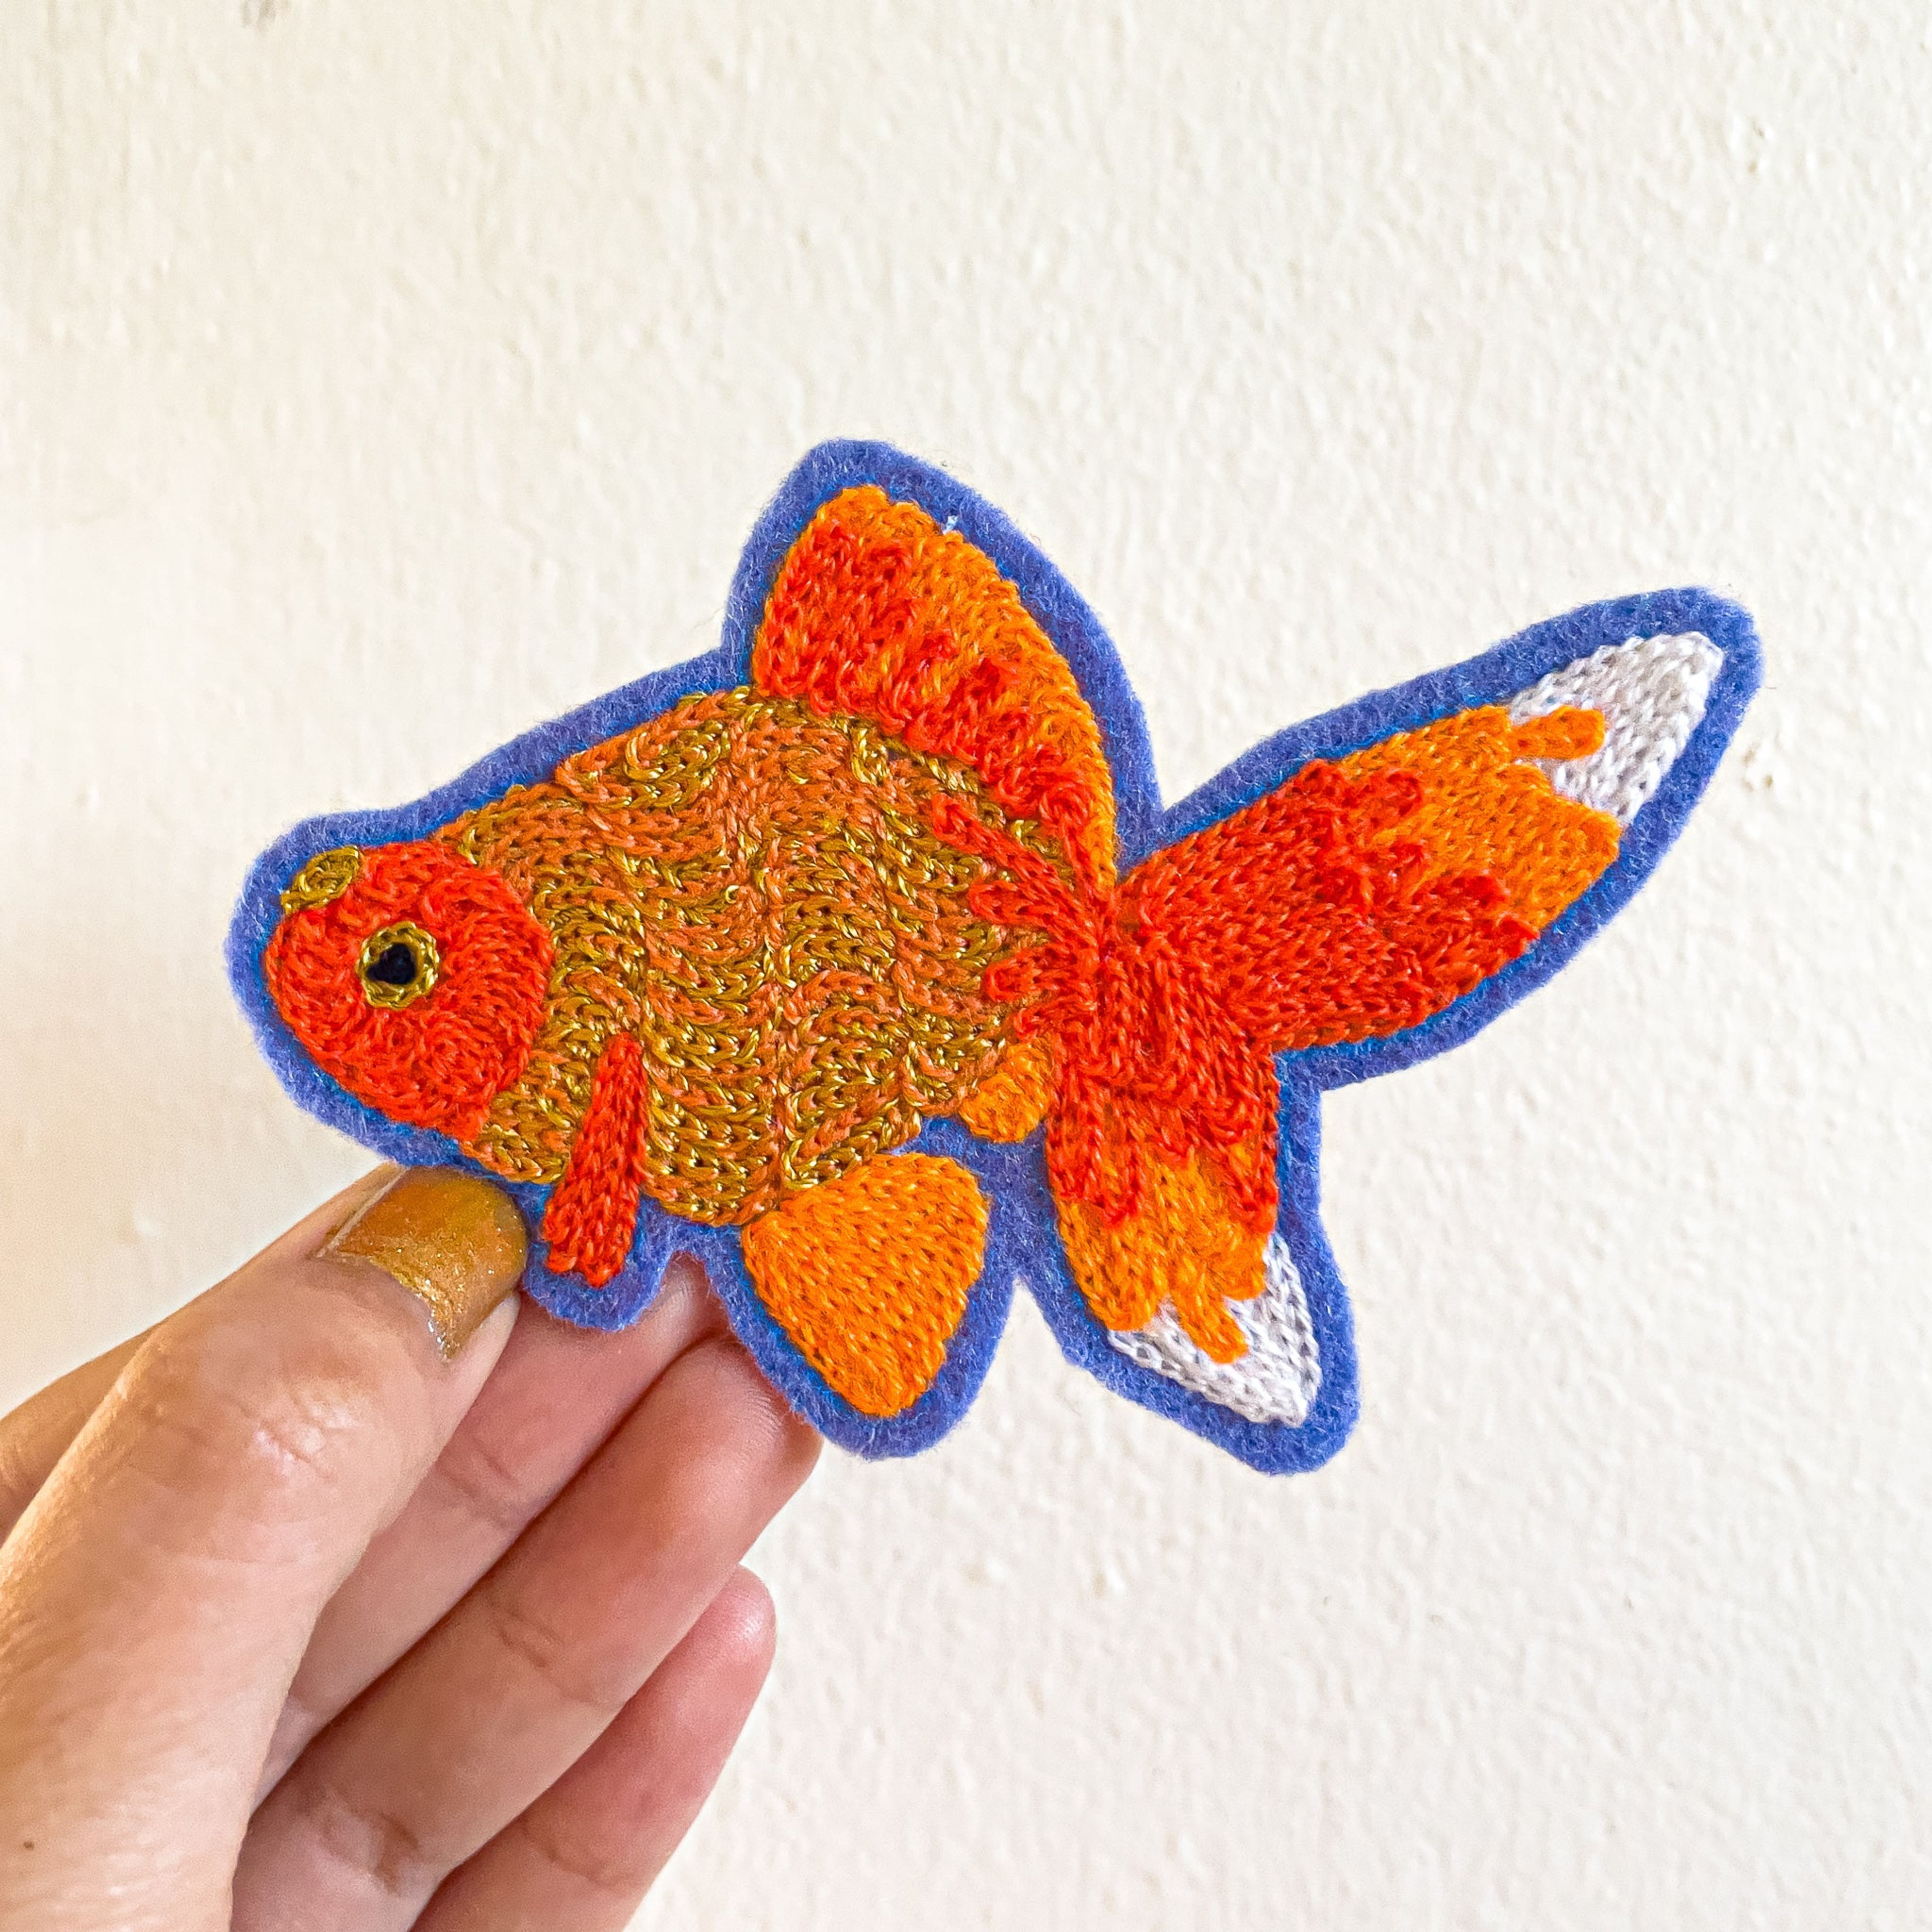 Goldfish - Chainstitch Patch